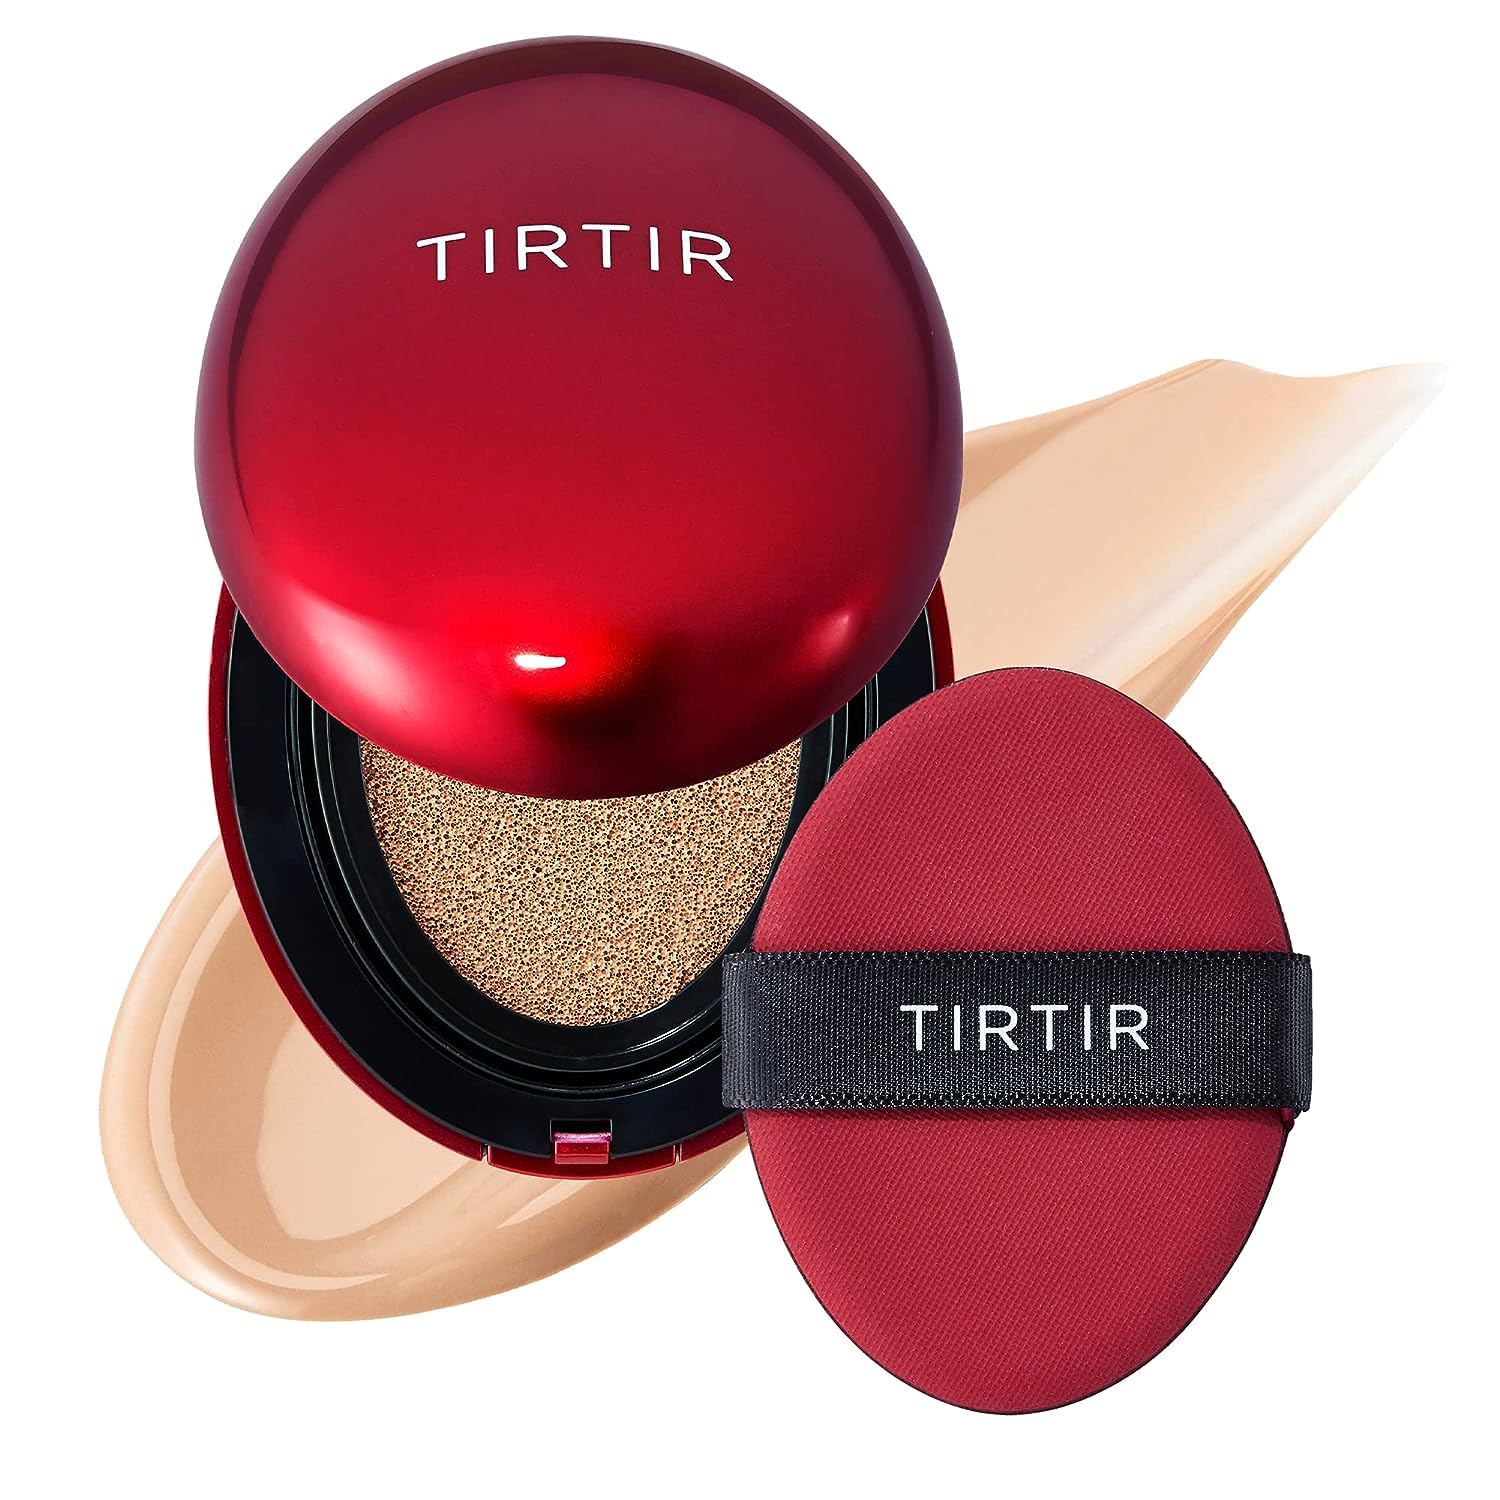 TIRTIR - Mask Fit Red Cushion 23N Sand